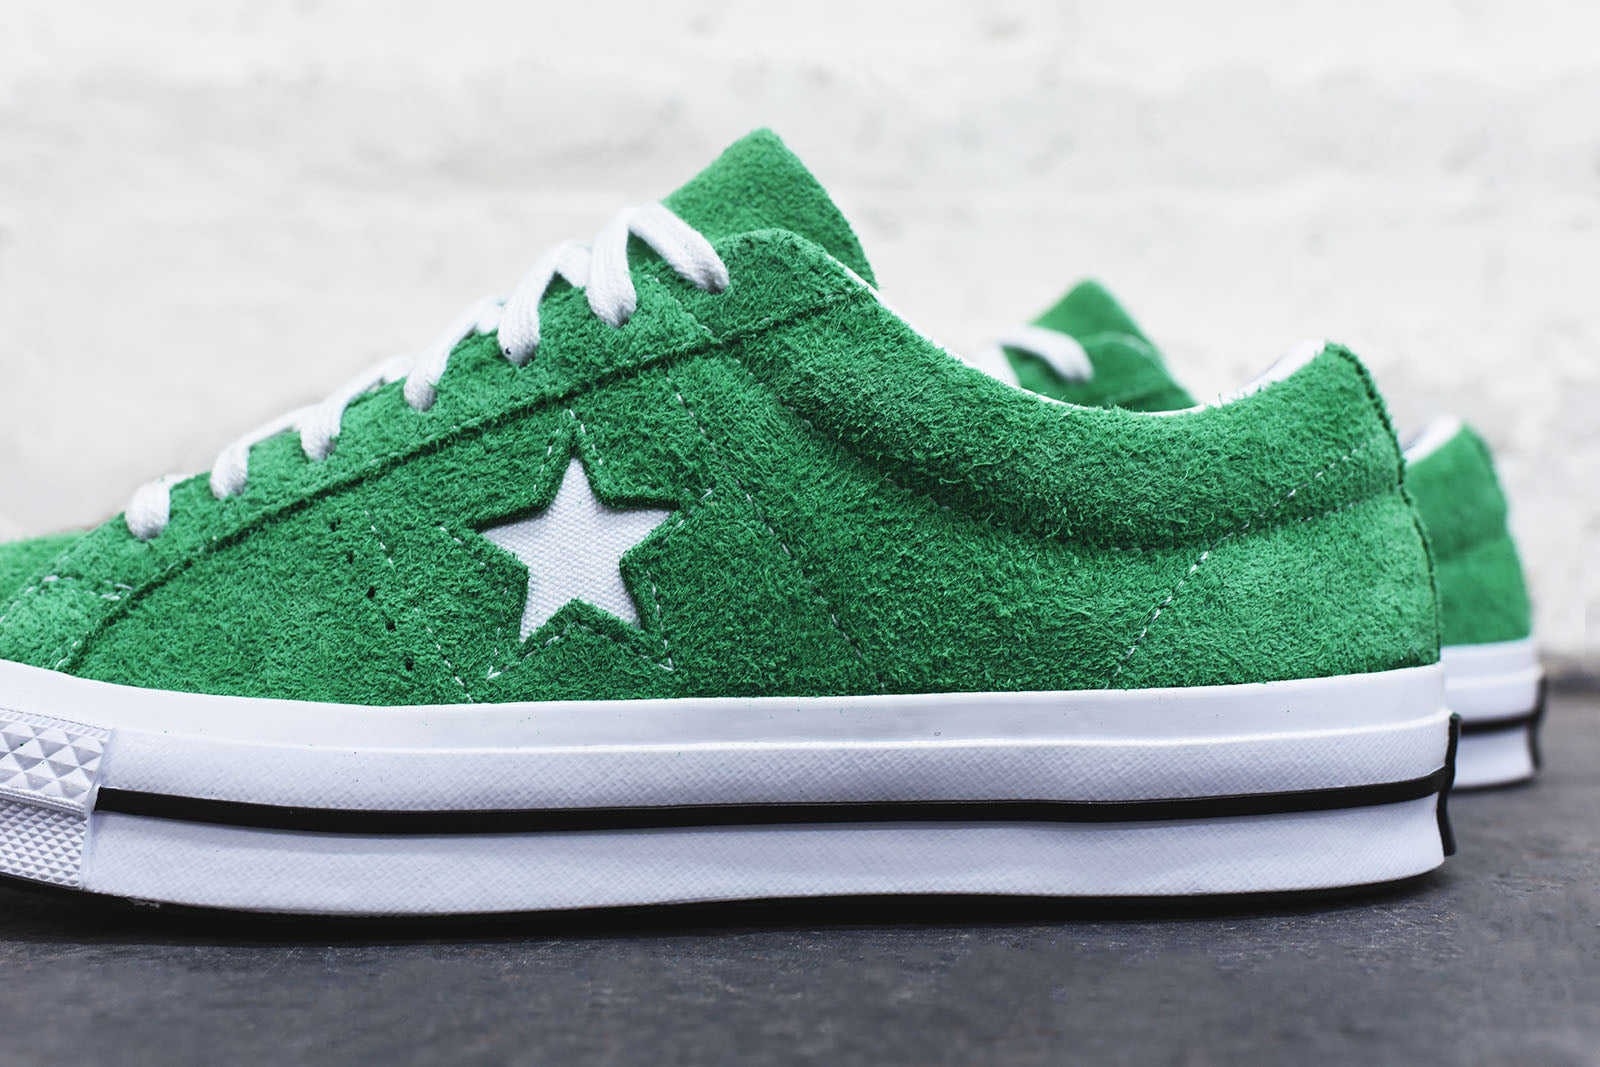 converse 1 star green \u003e Clearance shop